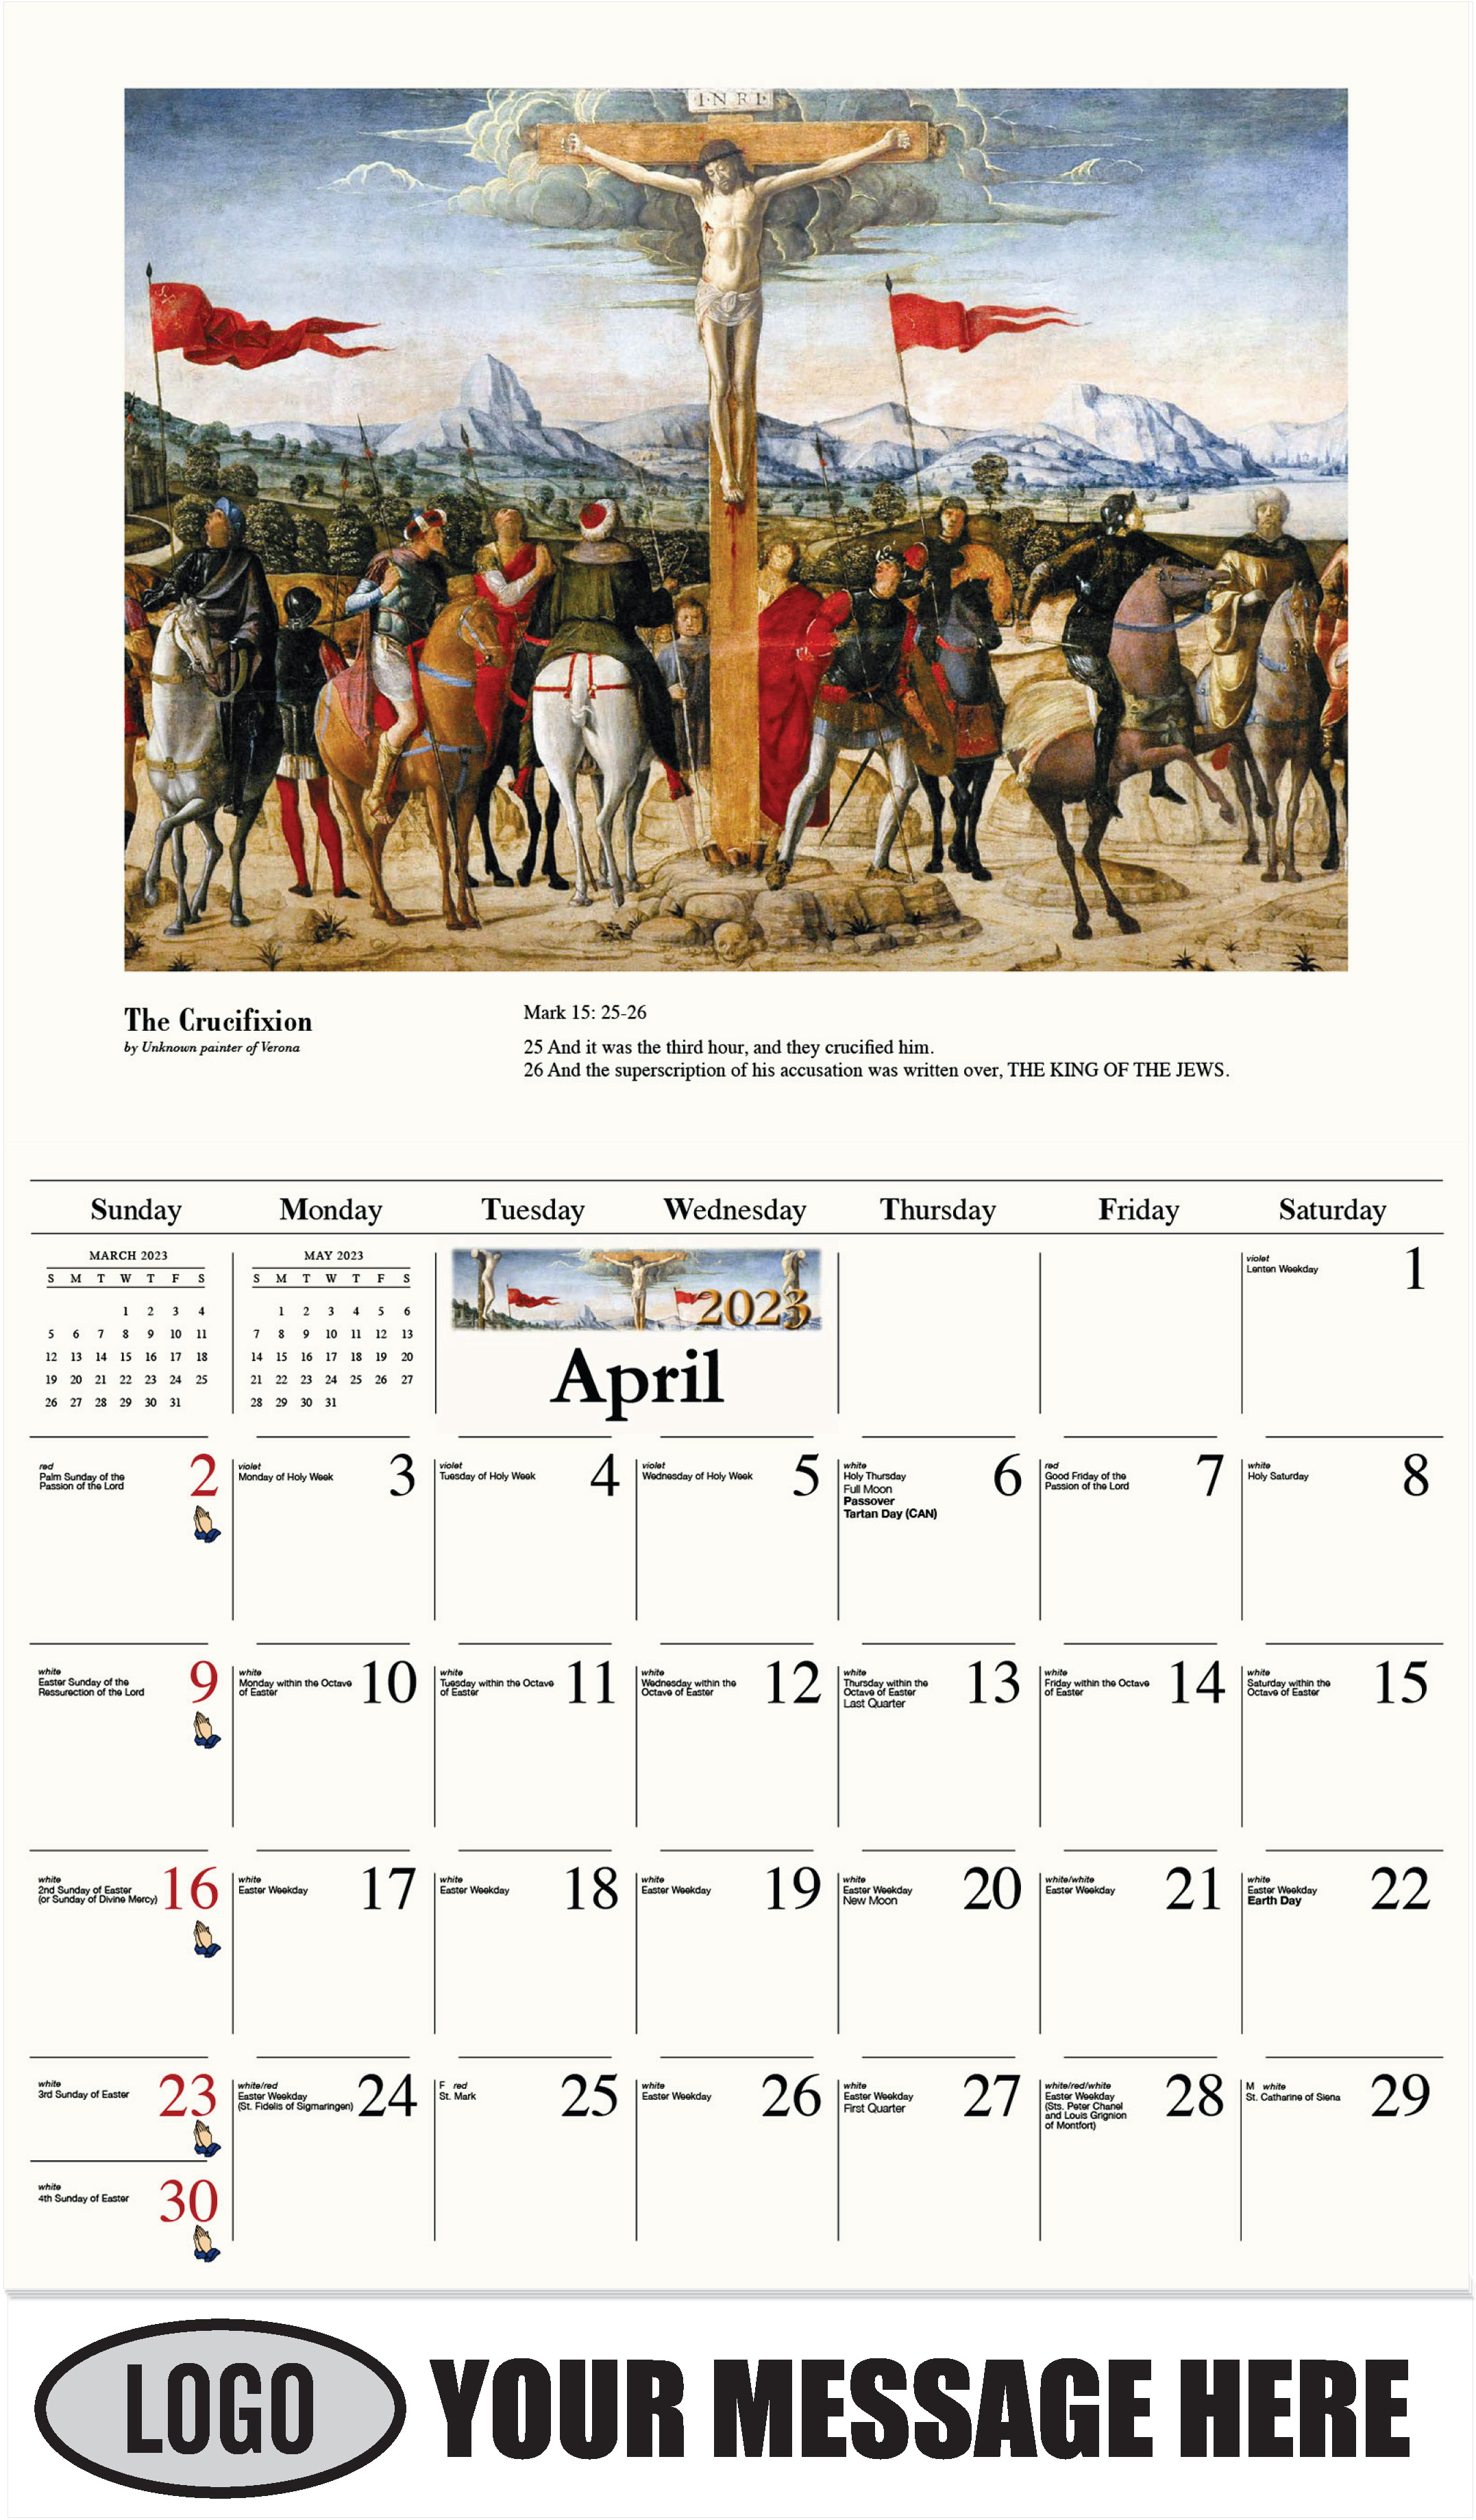 April - Catholic Inspiration 2023 Promotional Calendar